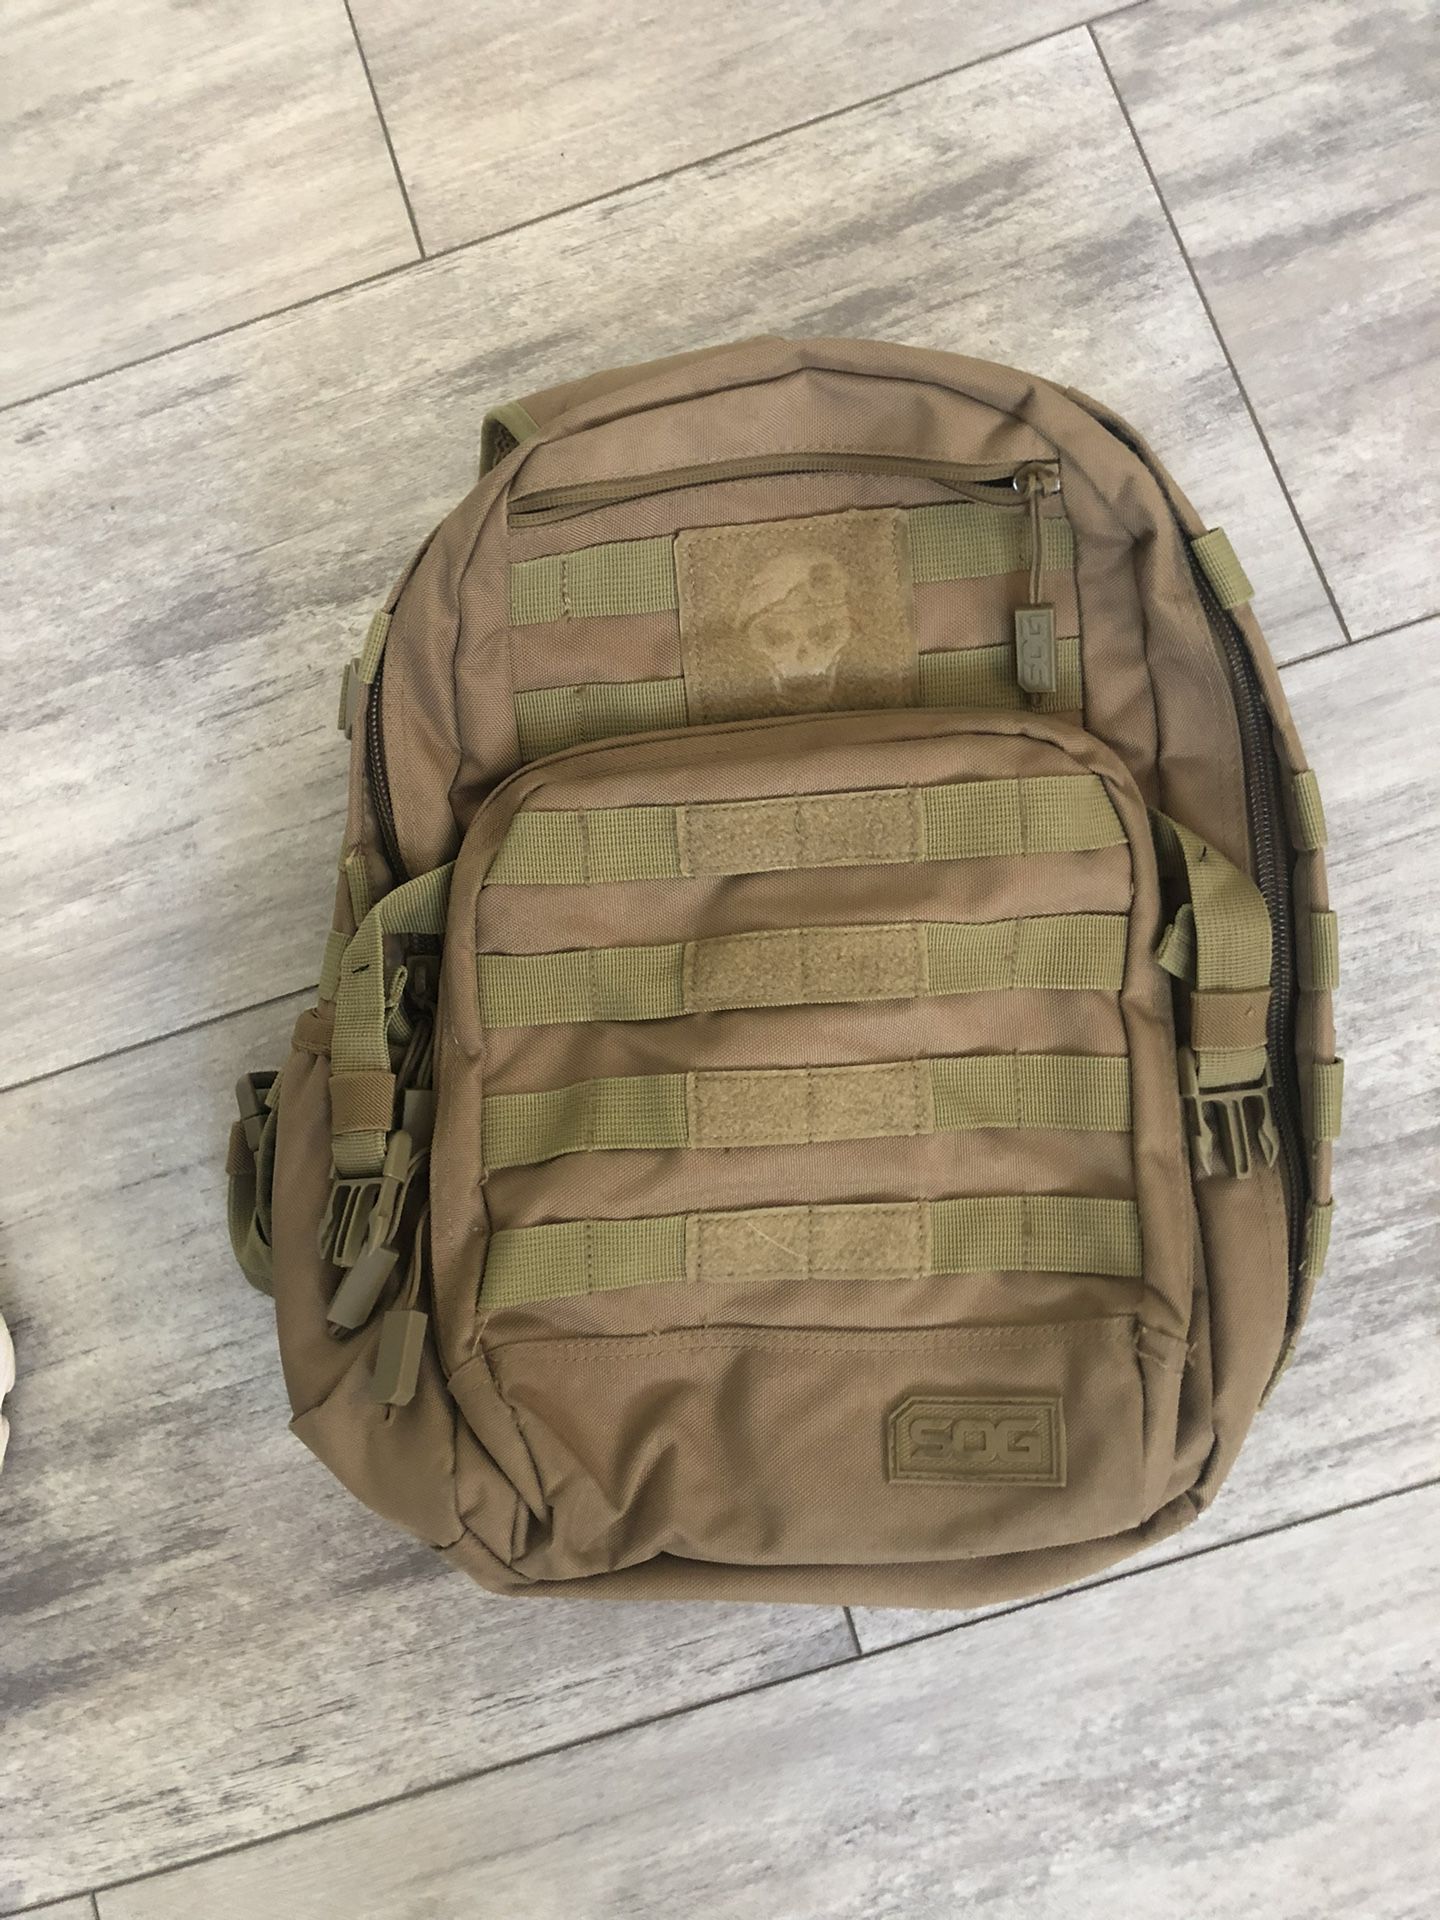 SOG Tactical Military Backpack 